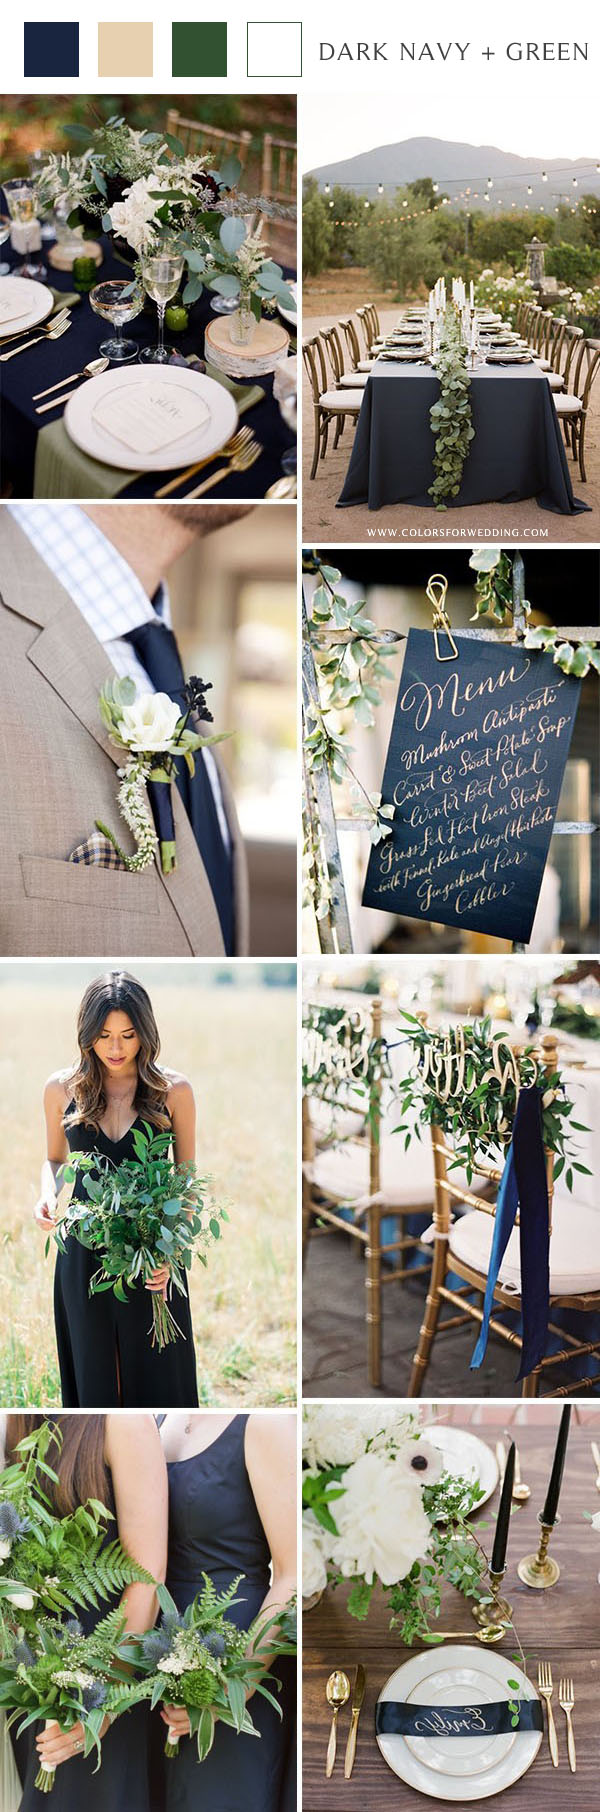 dark navy and greenery classic wedding colors